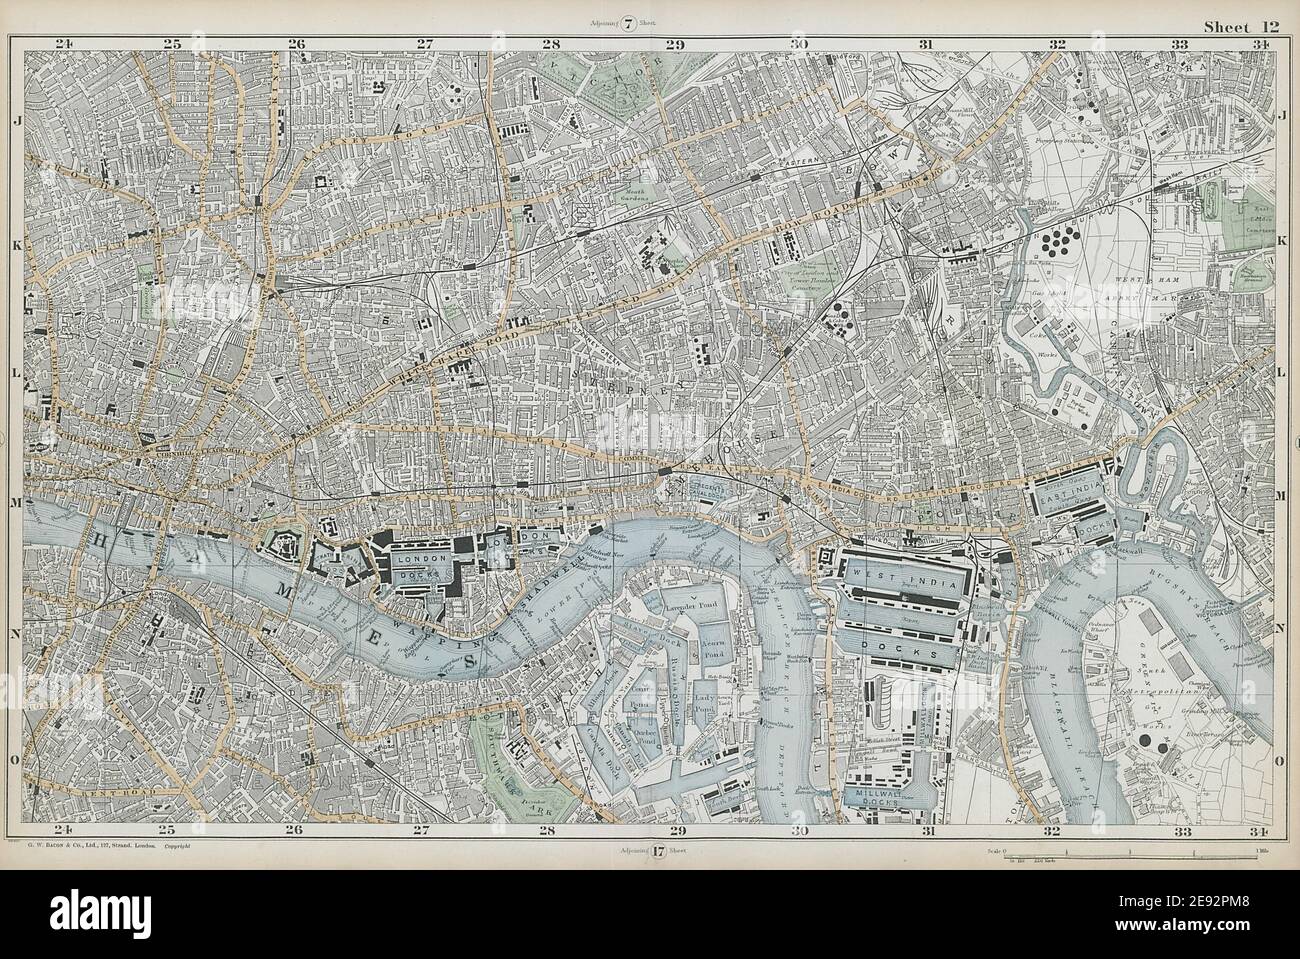 LONDRES City East End Southwark Bethenh Green Docks Shoreditch. Mapa DE BACON 1906 Foto de stock